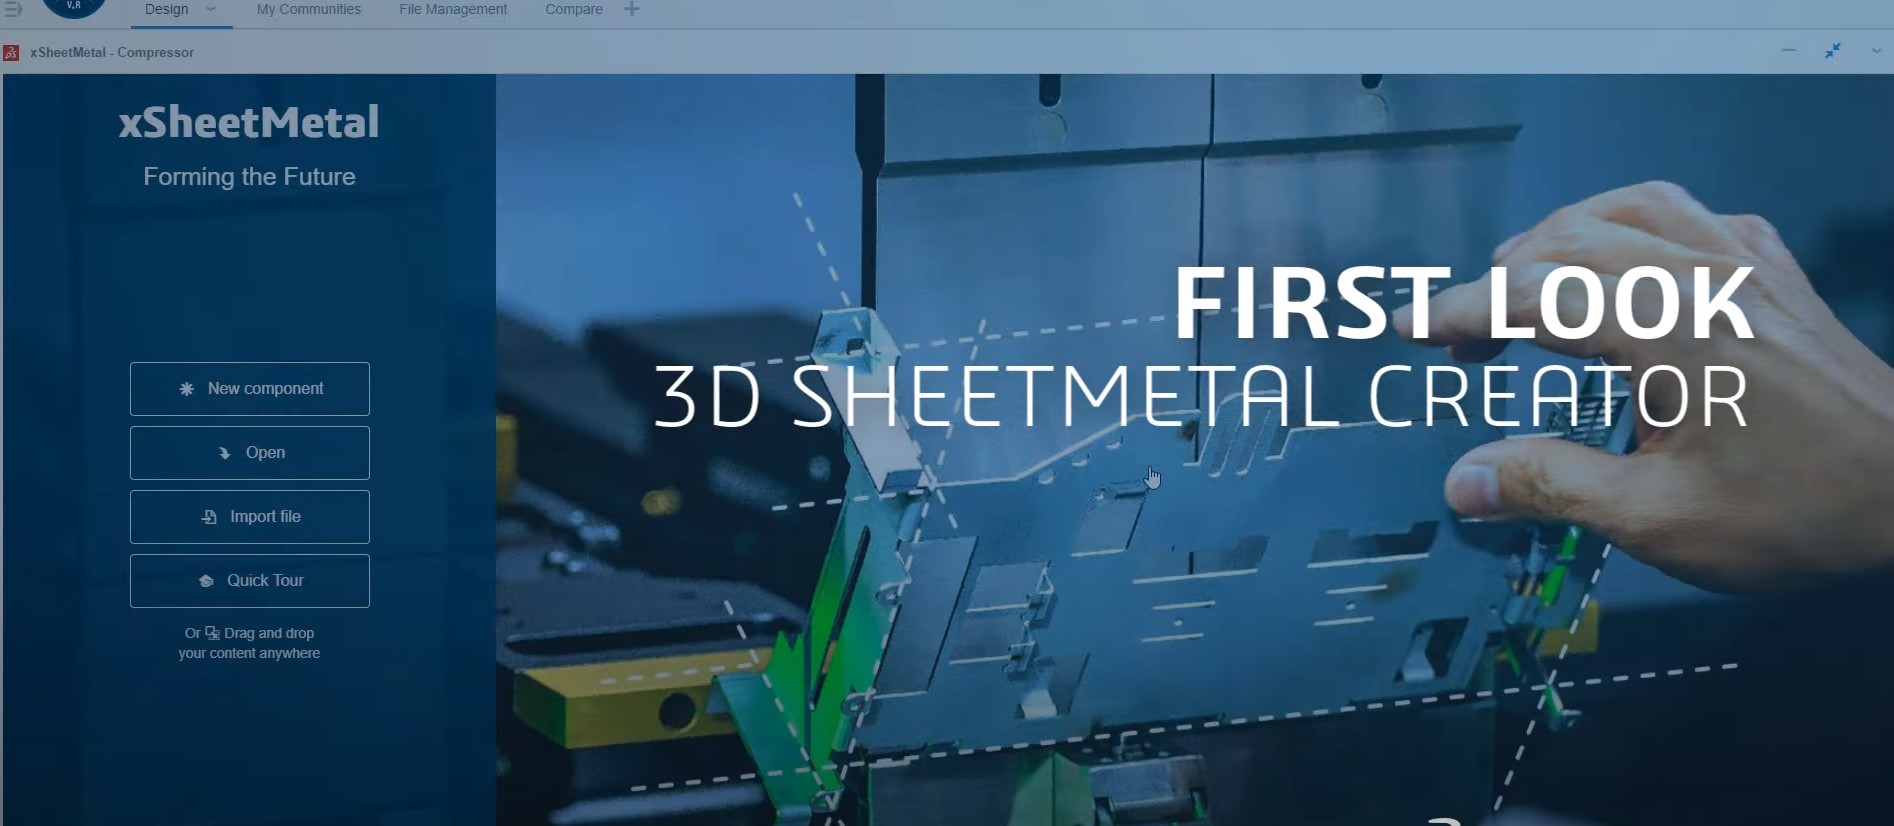 First Look - 3D SheetMetal Creator